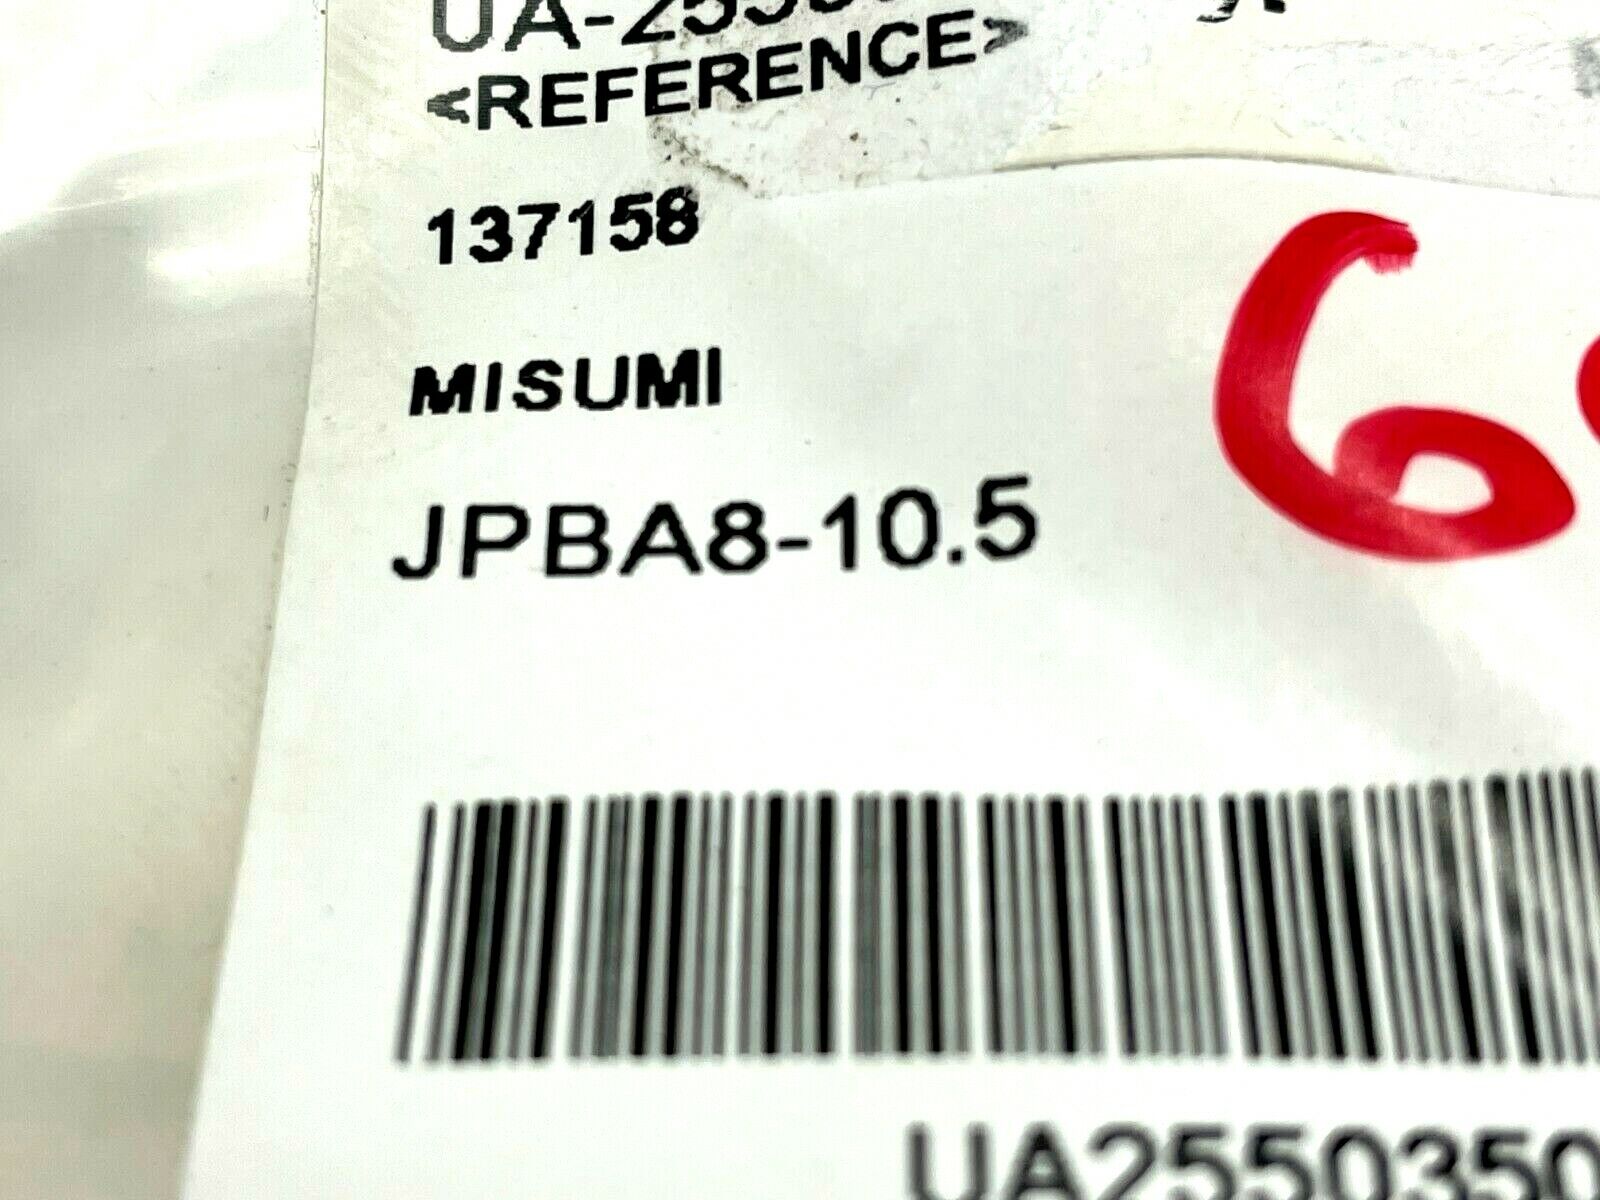 MiSUMi JPBA8-10.5 Large Head Locating Pin Tapered Tip Straight Shank